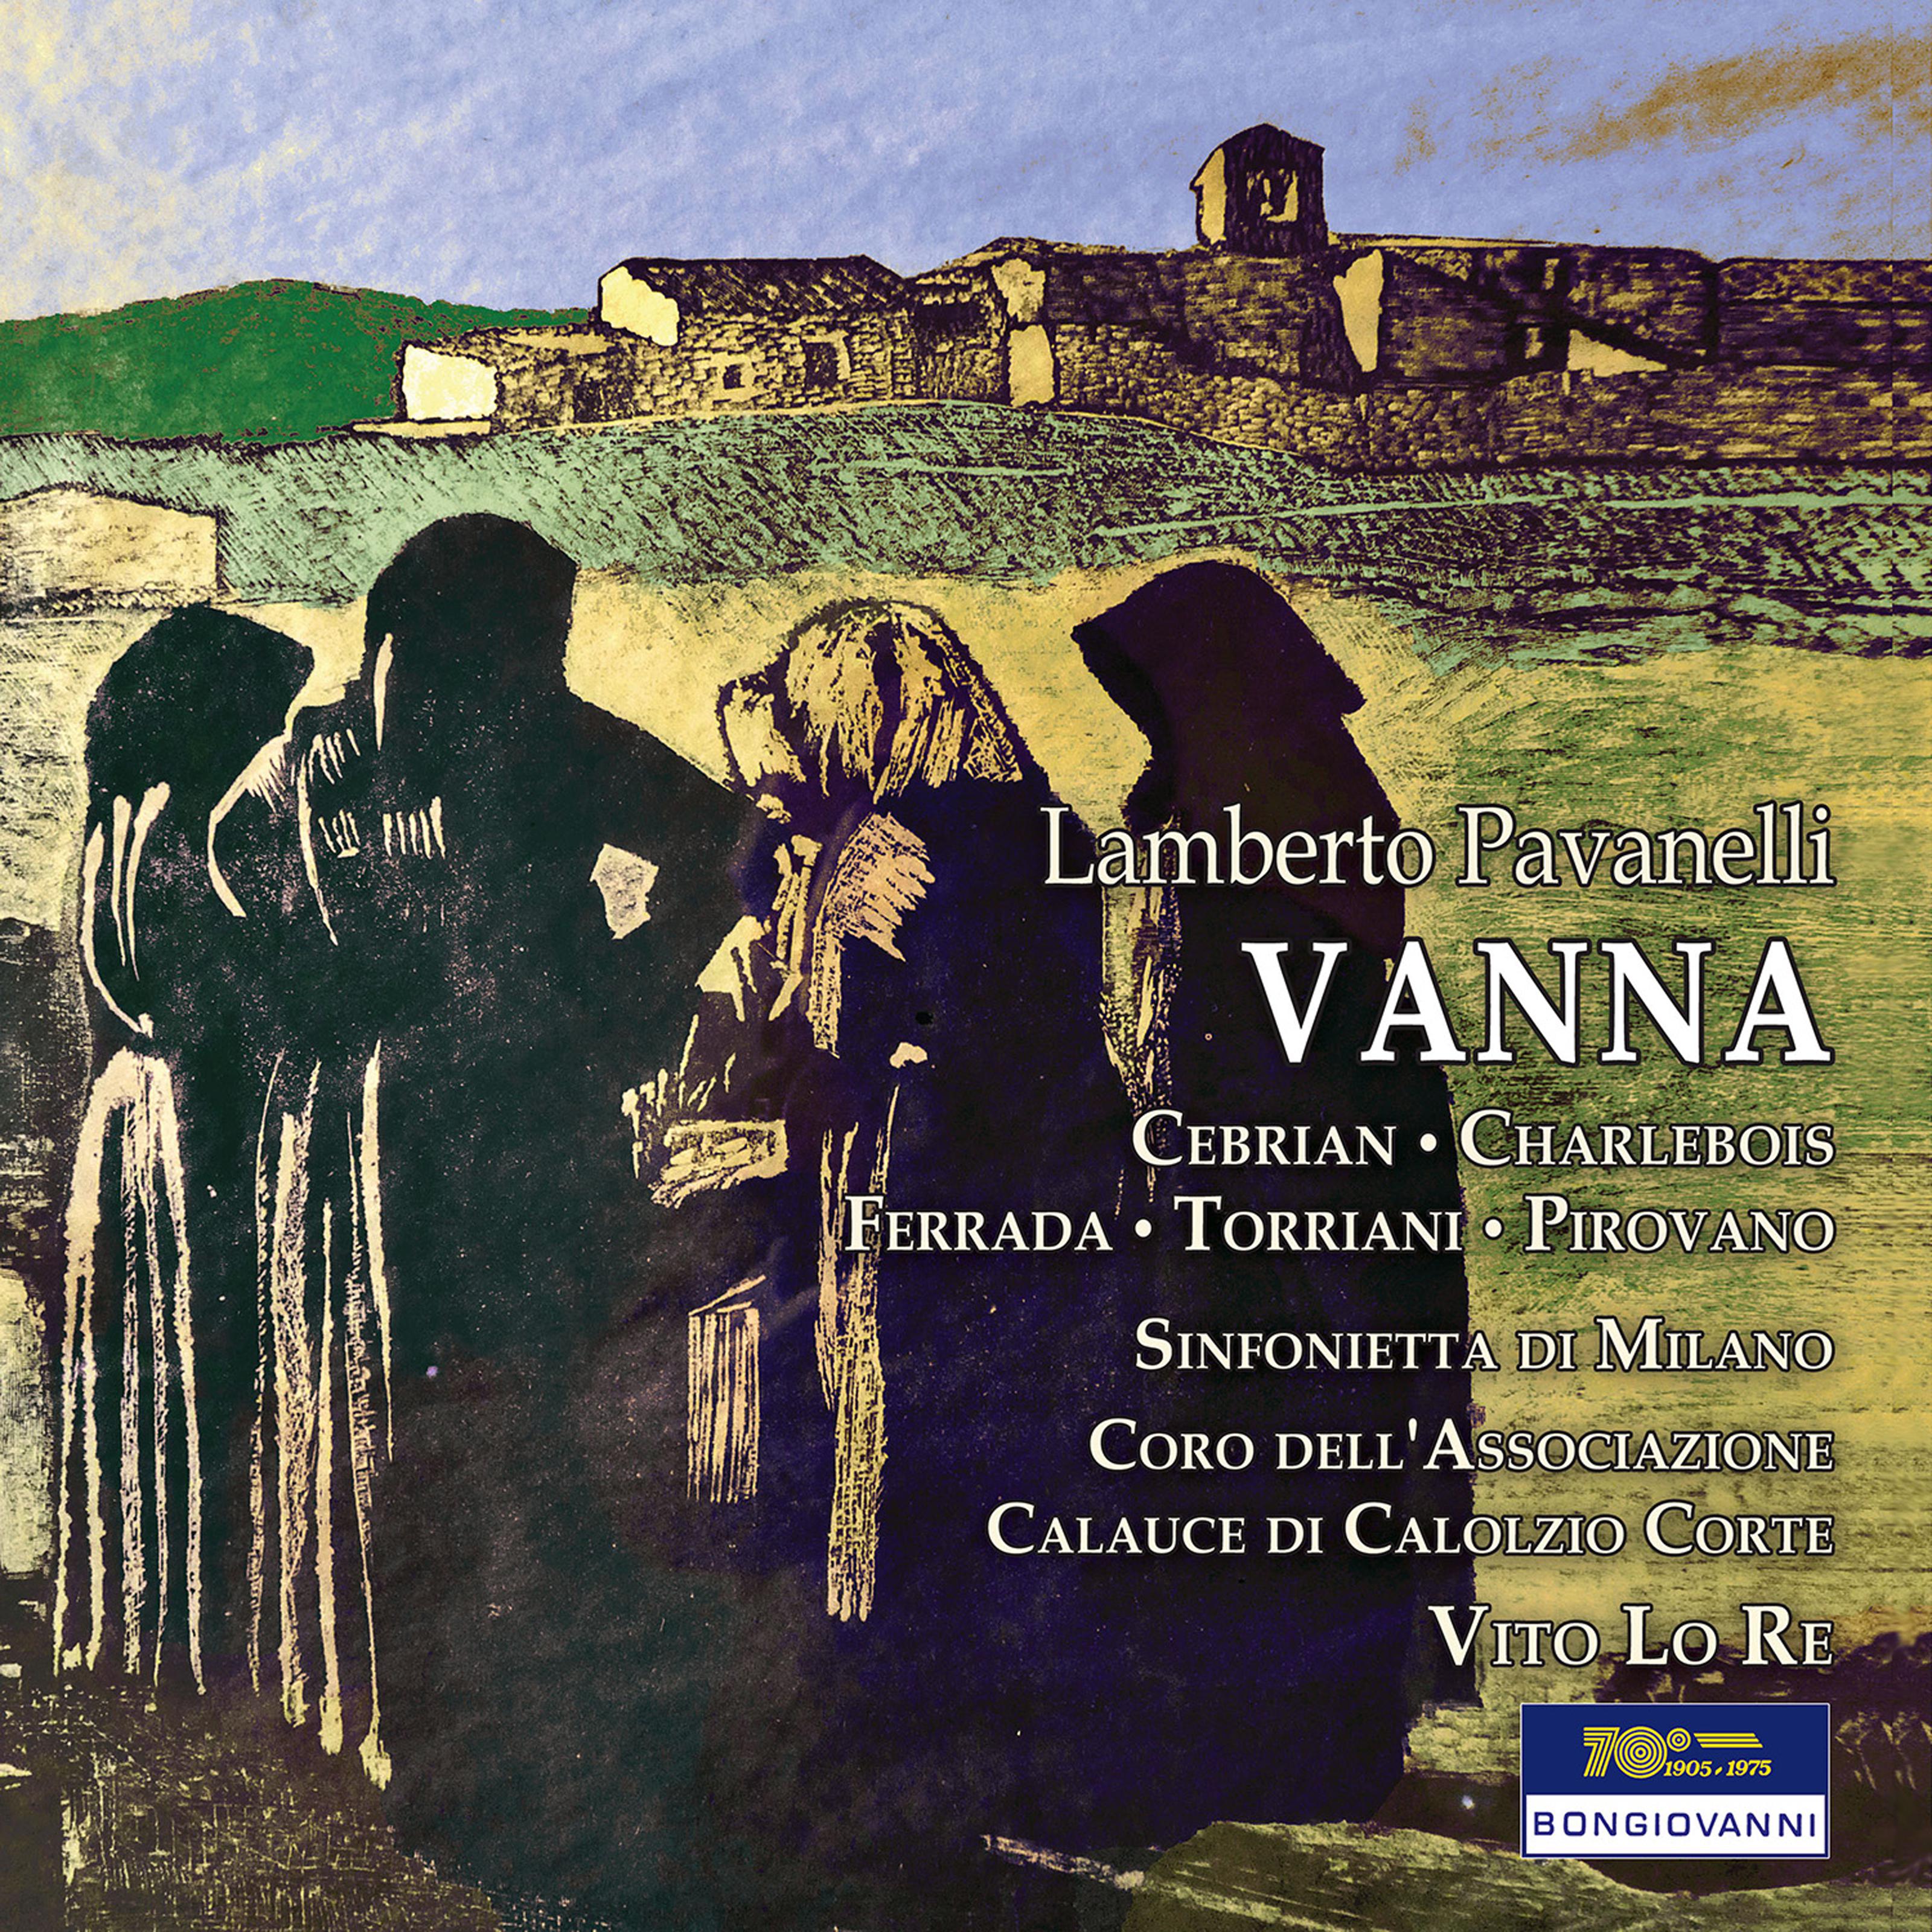 Ezio Pirovano - Vanna: Vurria cantare